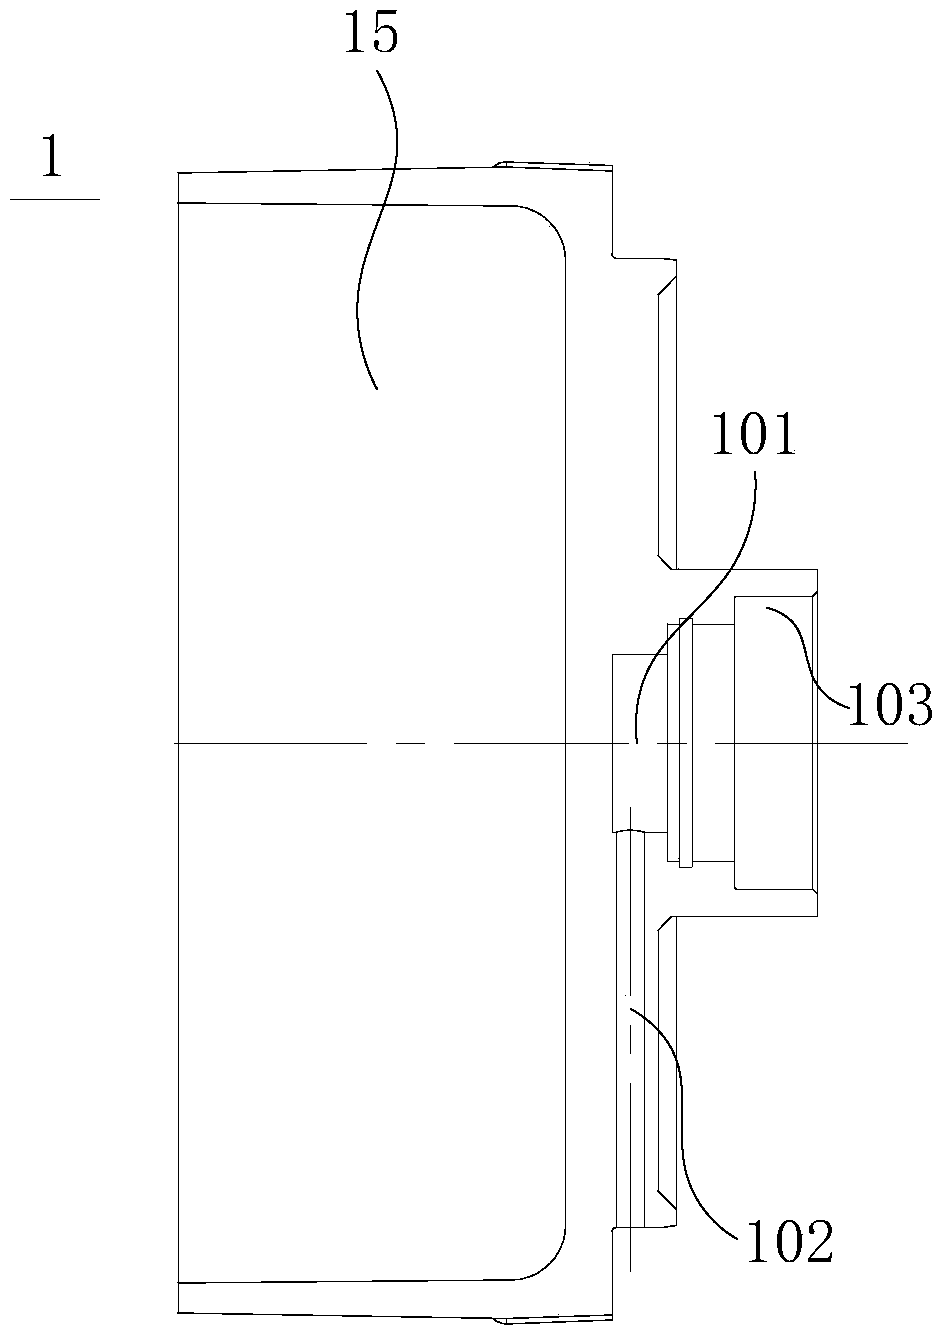 A horizontal scroll compressor